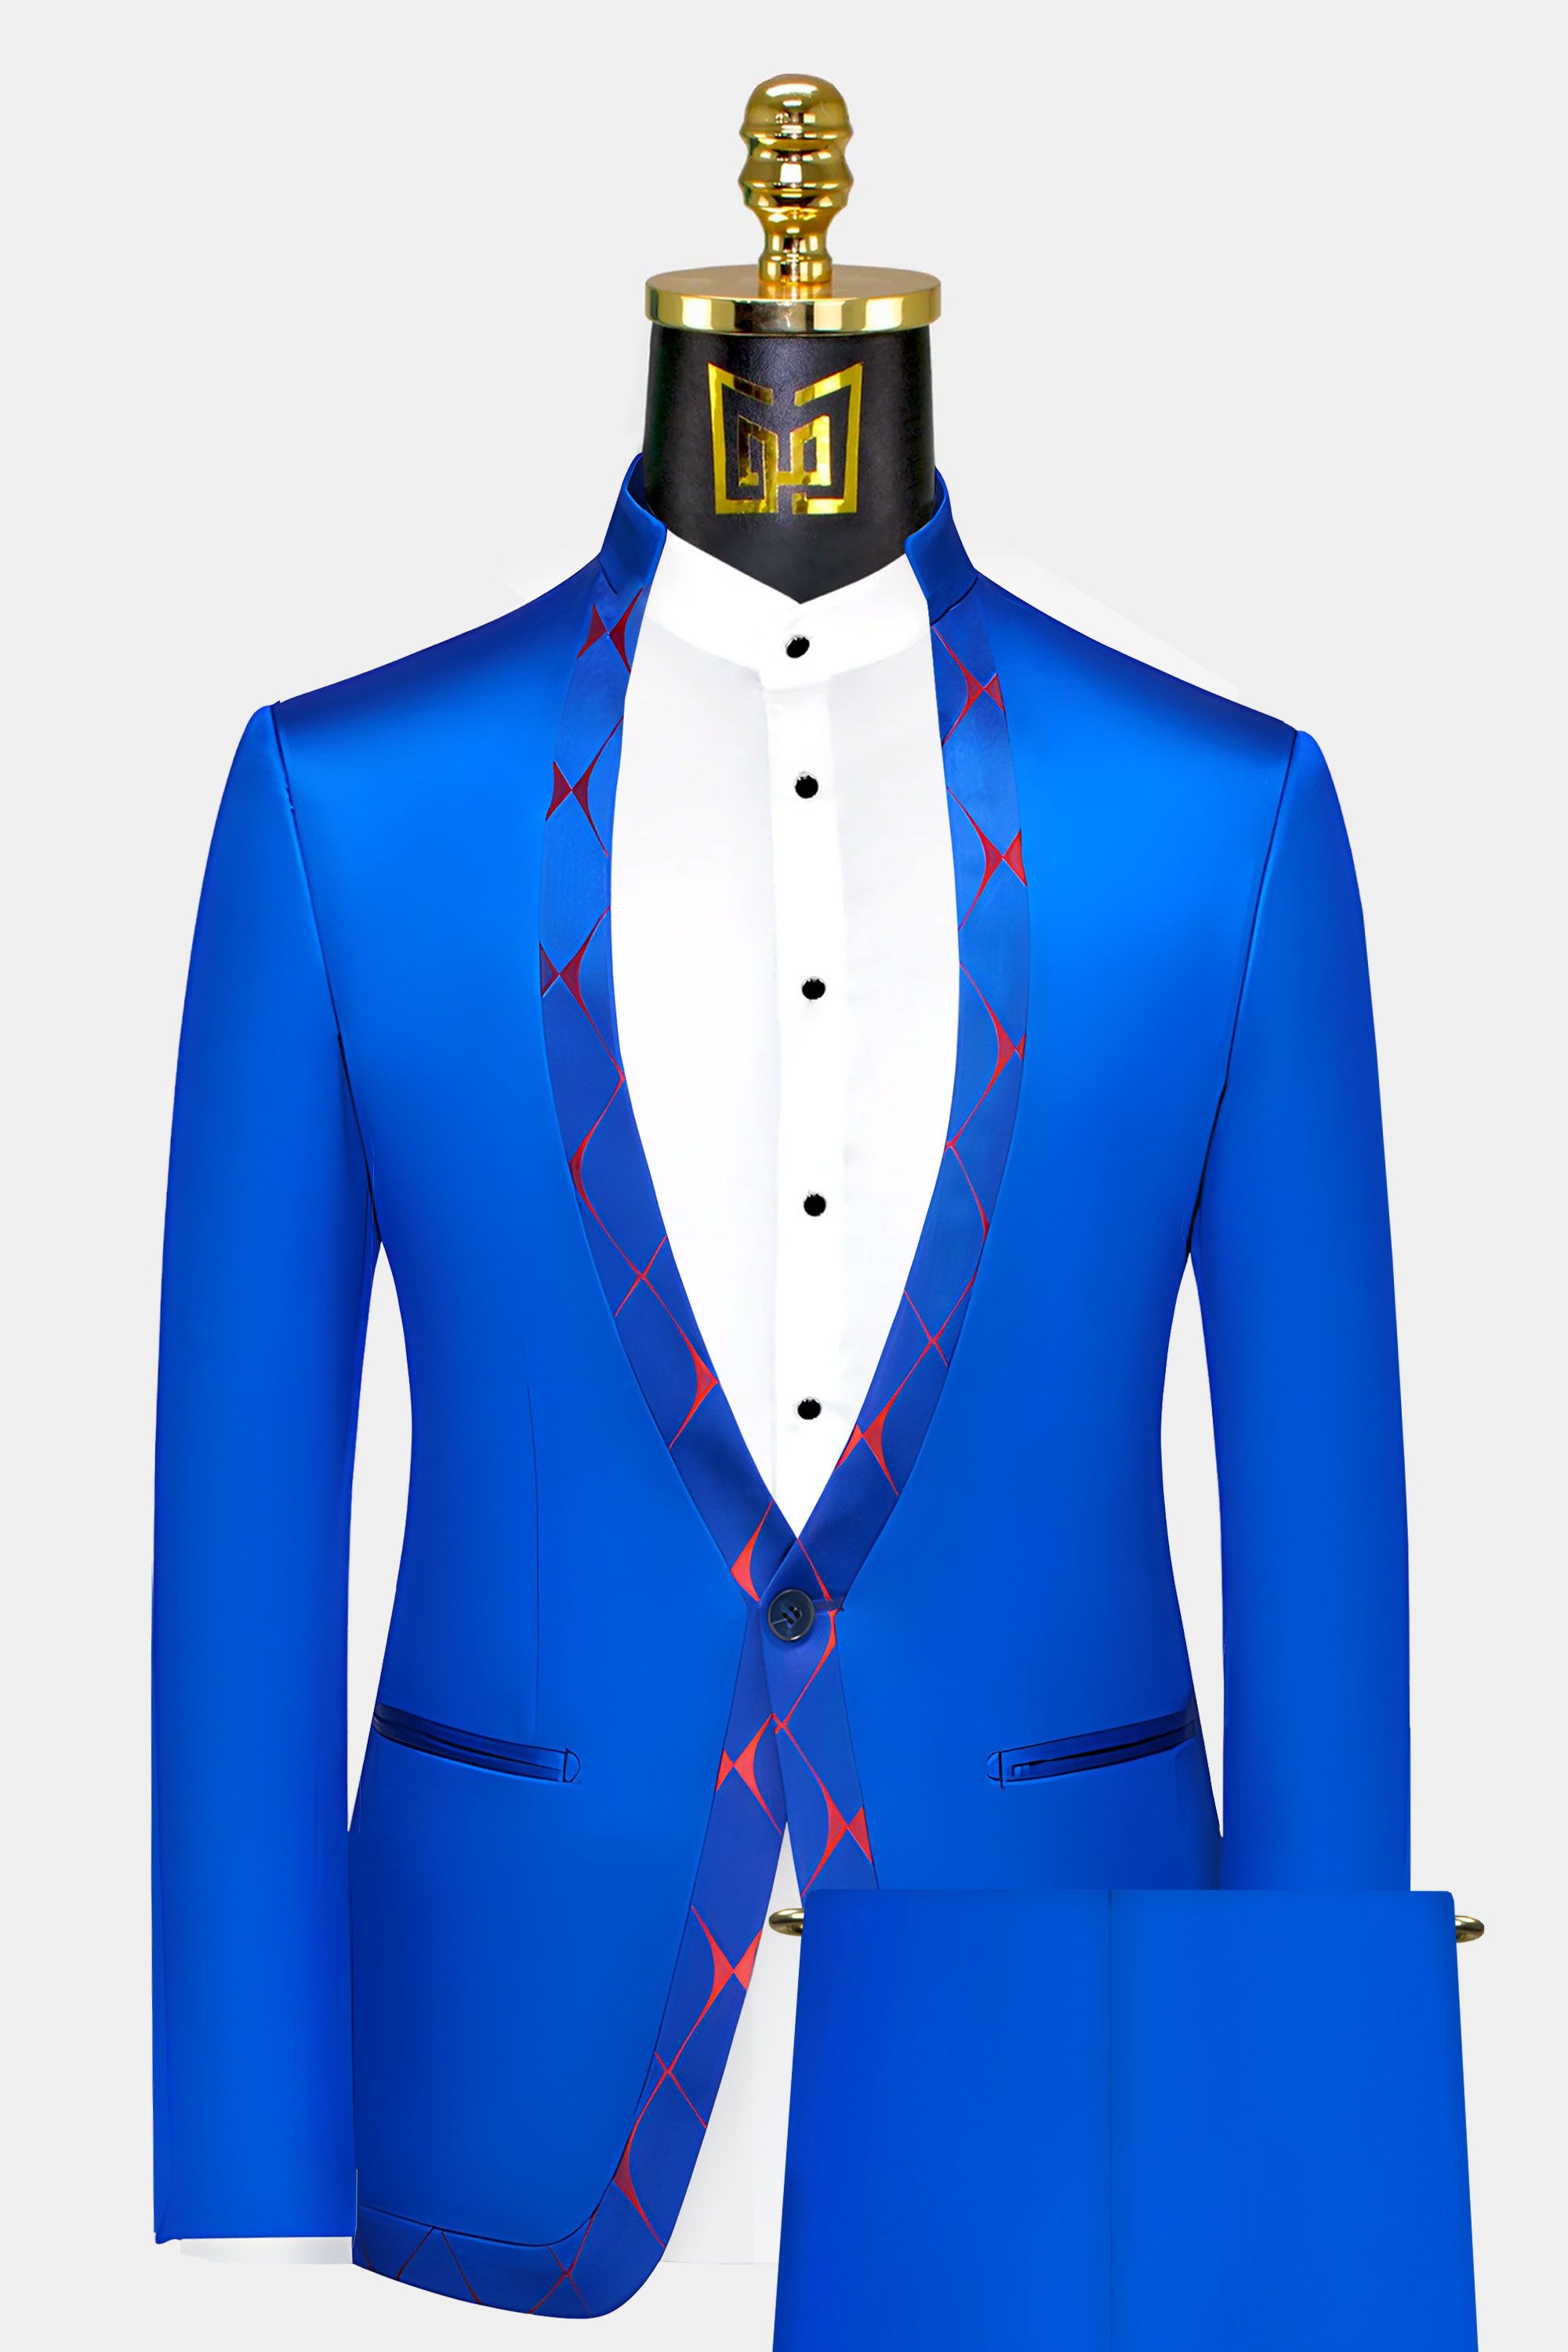 Mens-Blue-and-Red-Mandarin-Collar-Suit-Tuxedo-For-Groom-Asian-Style-from-Gentlemansguru.com